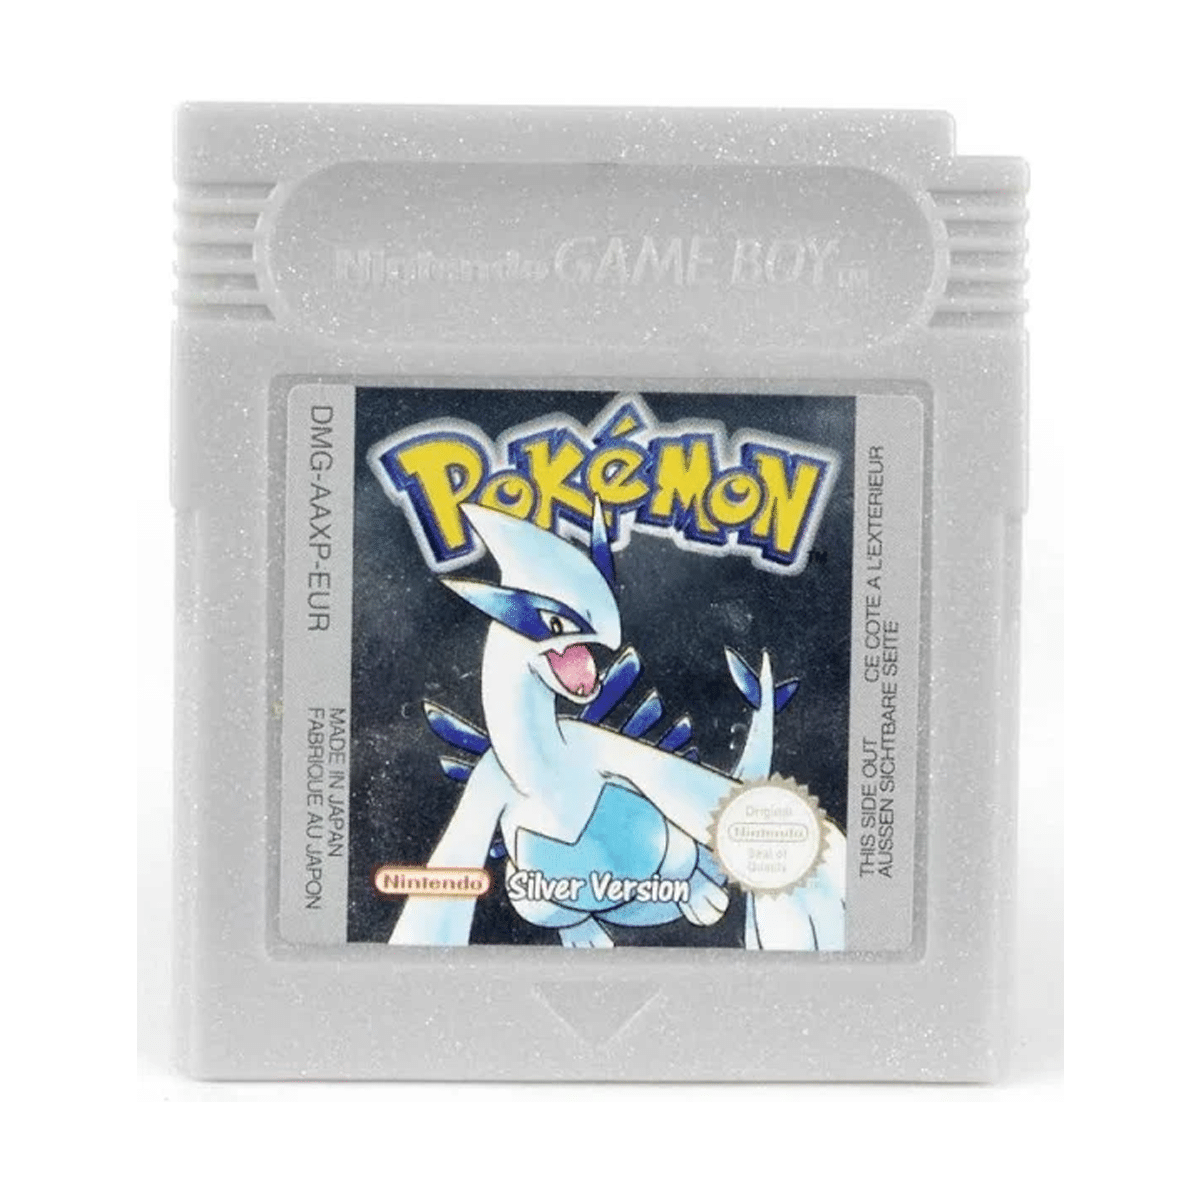 Pokémon - Game Boy Color Spil -